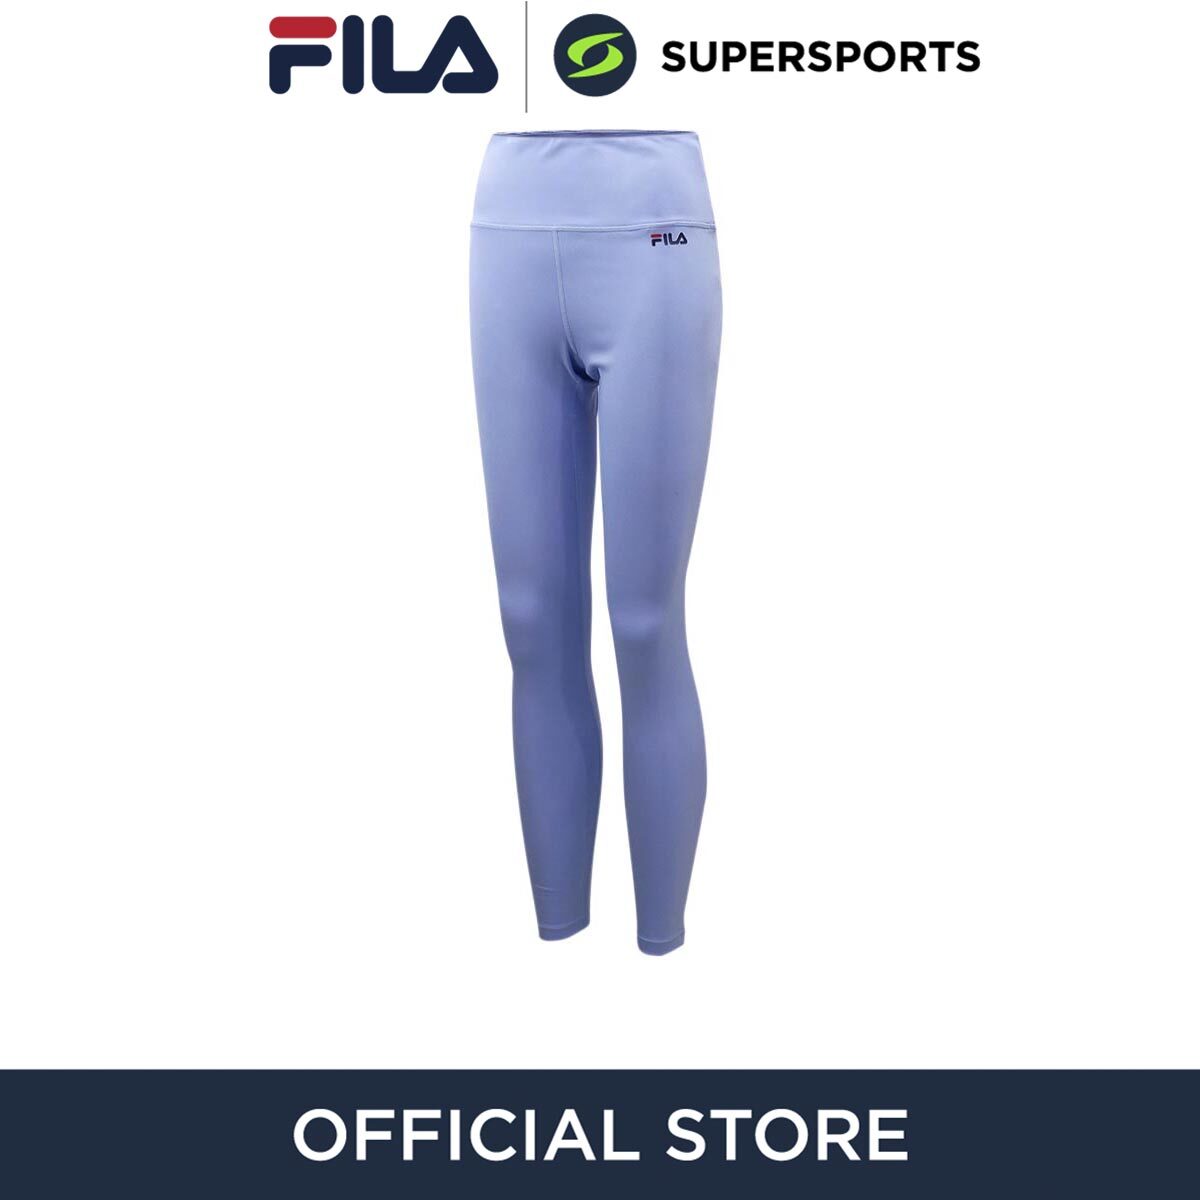 FILA FILA LGA230503W Women's Training Pants